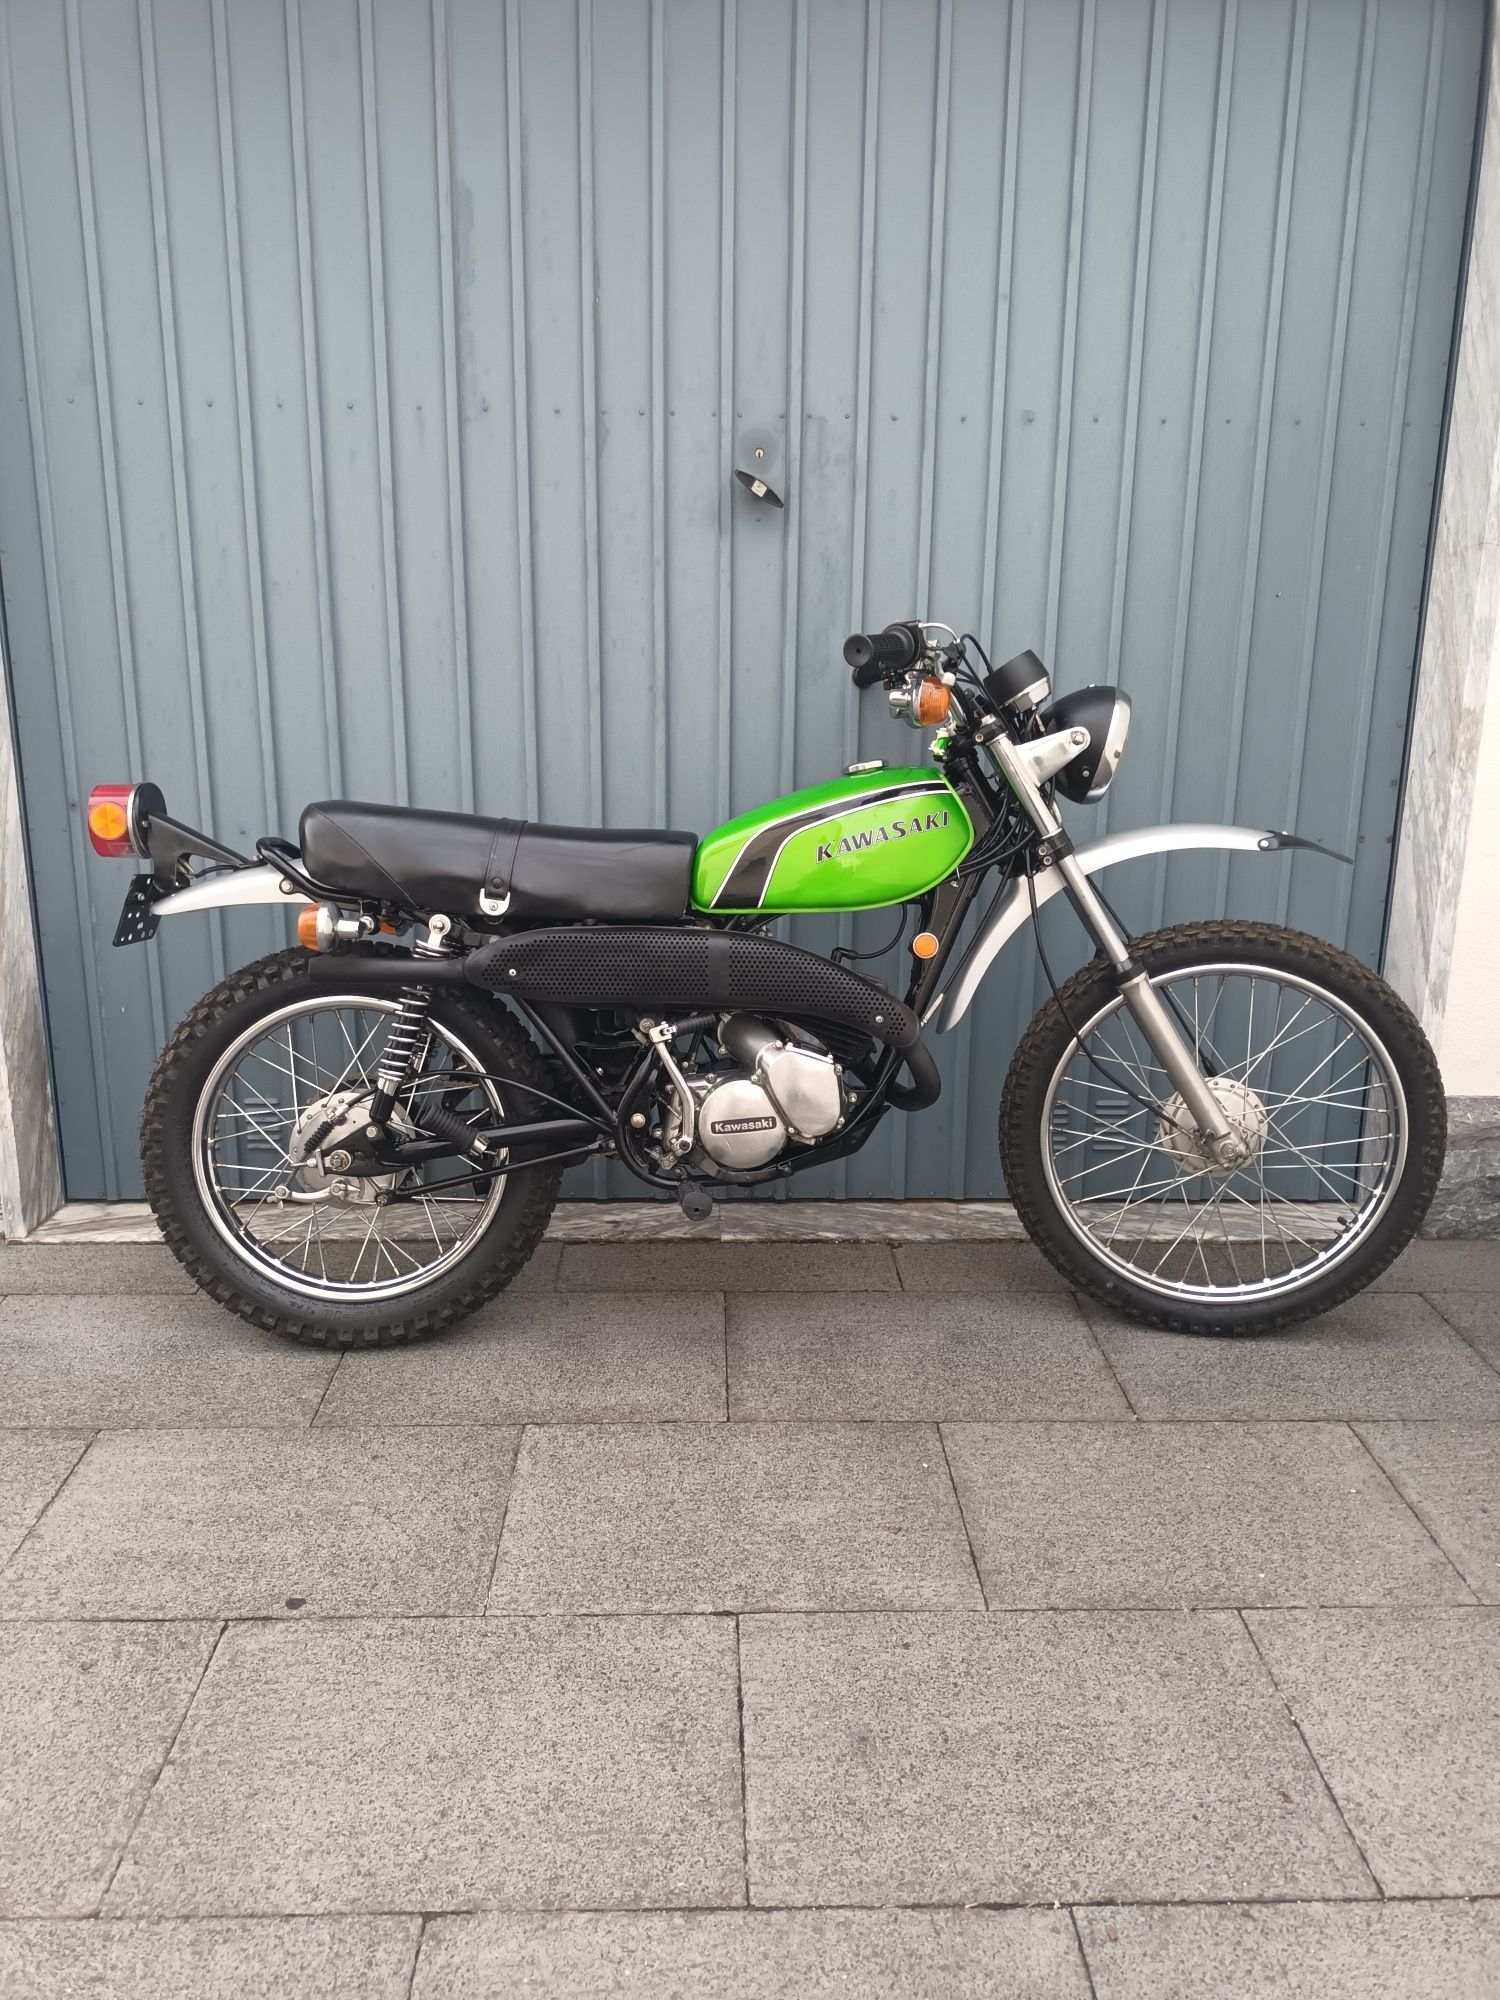 Kawasaki KS 125 cc